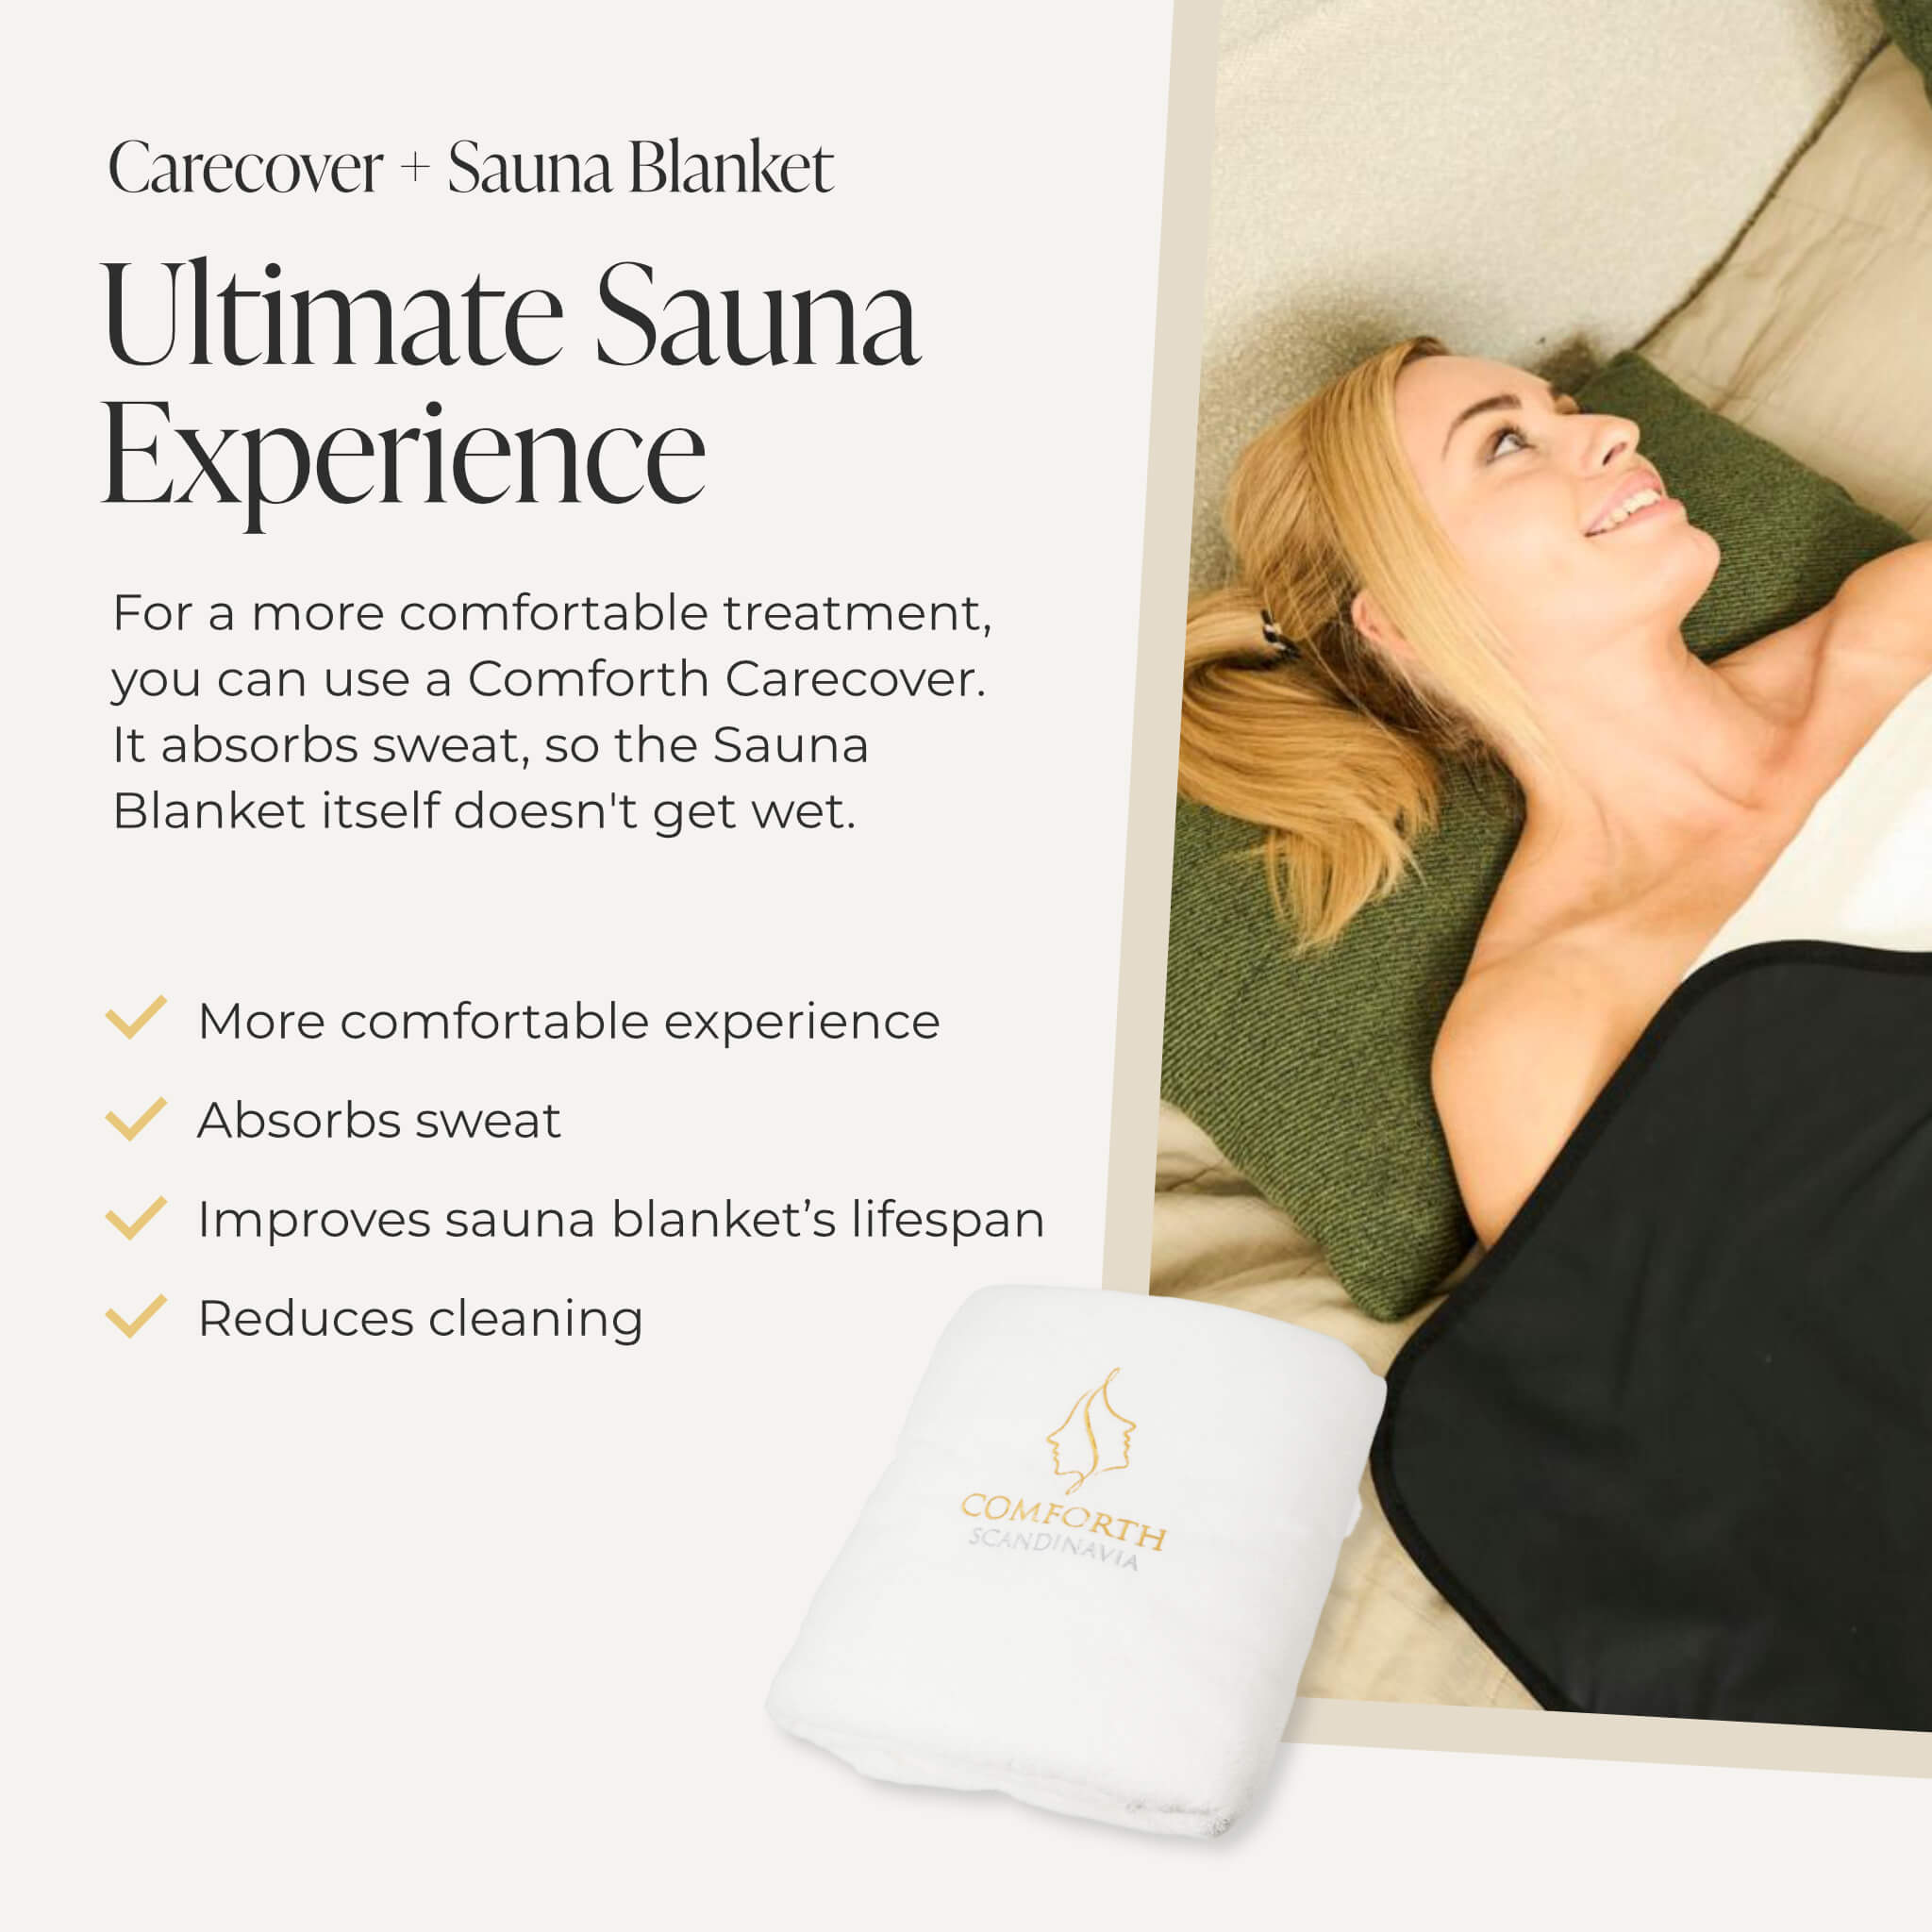 Carecover for Sauna blanket